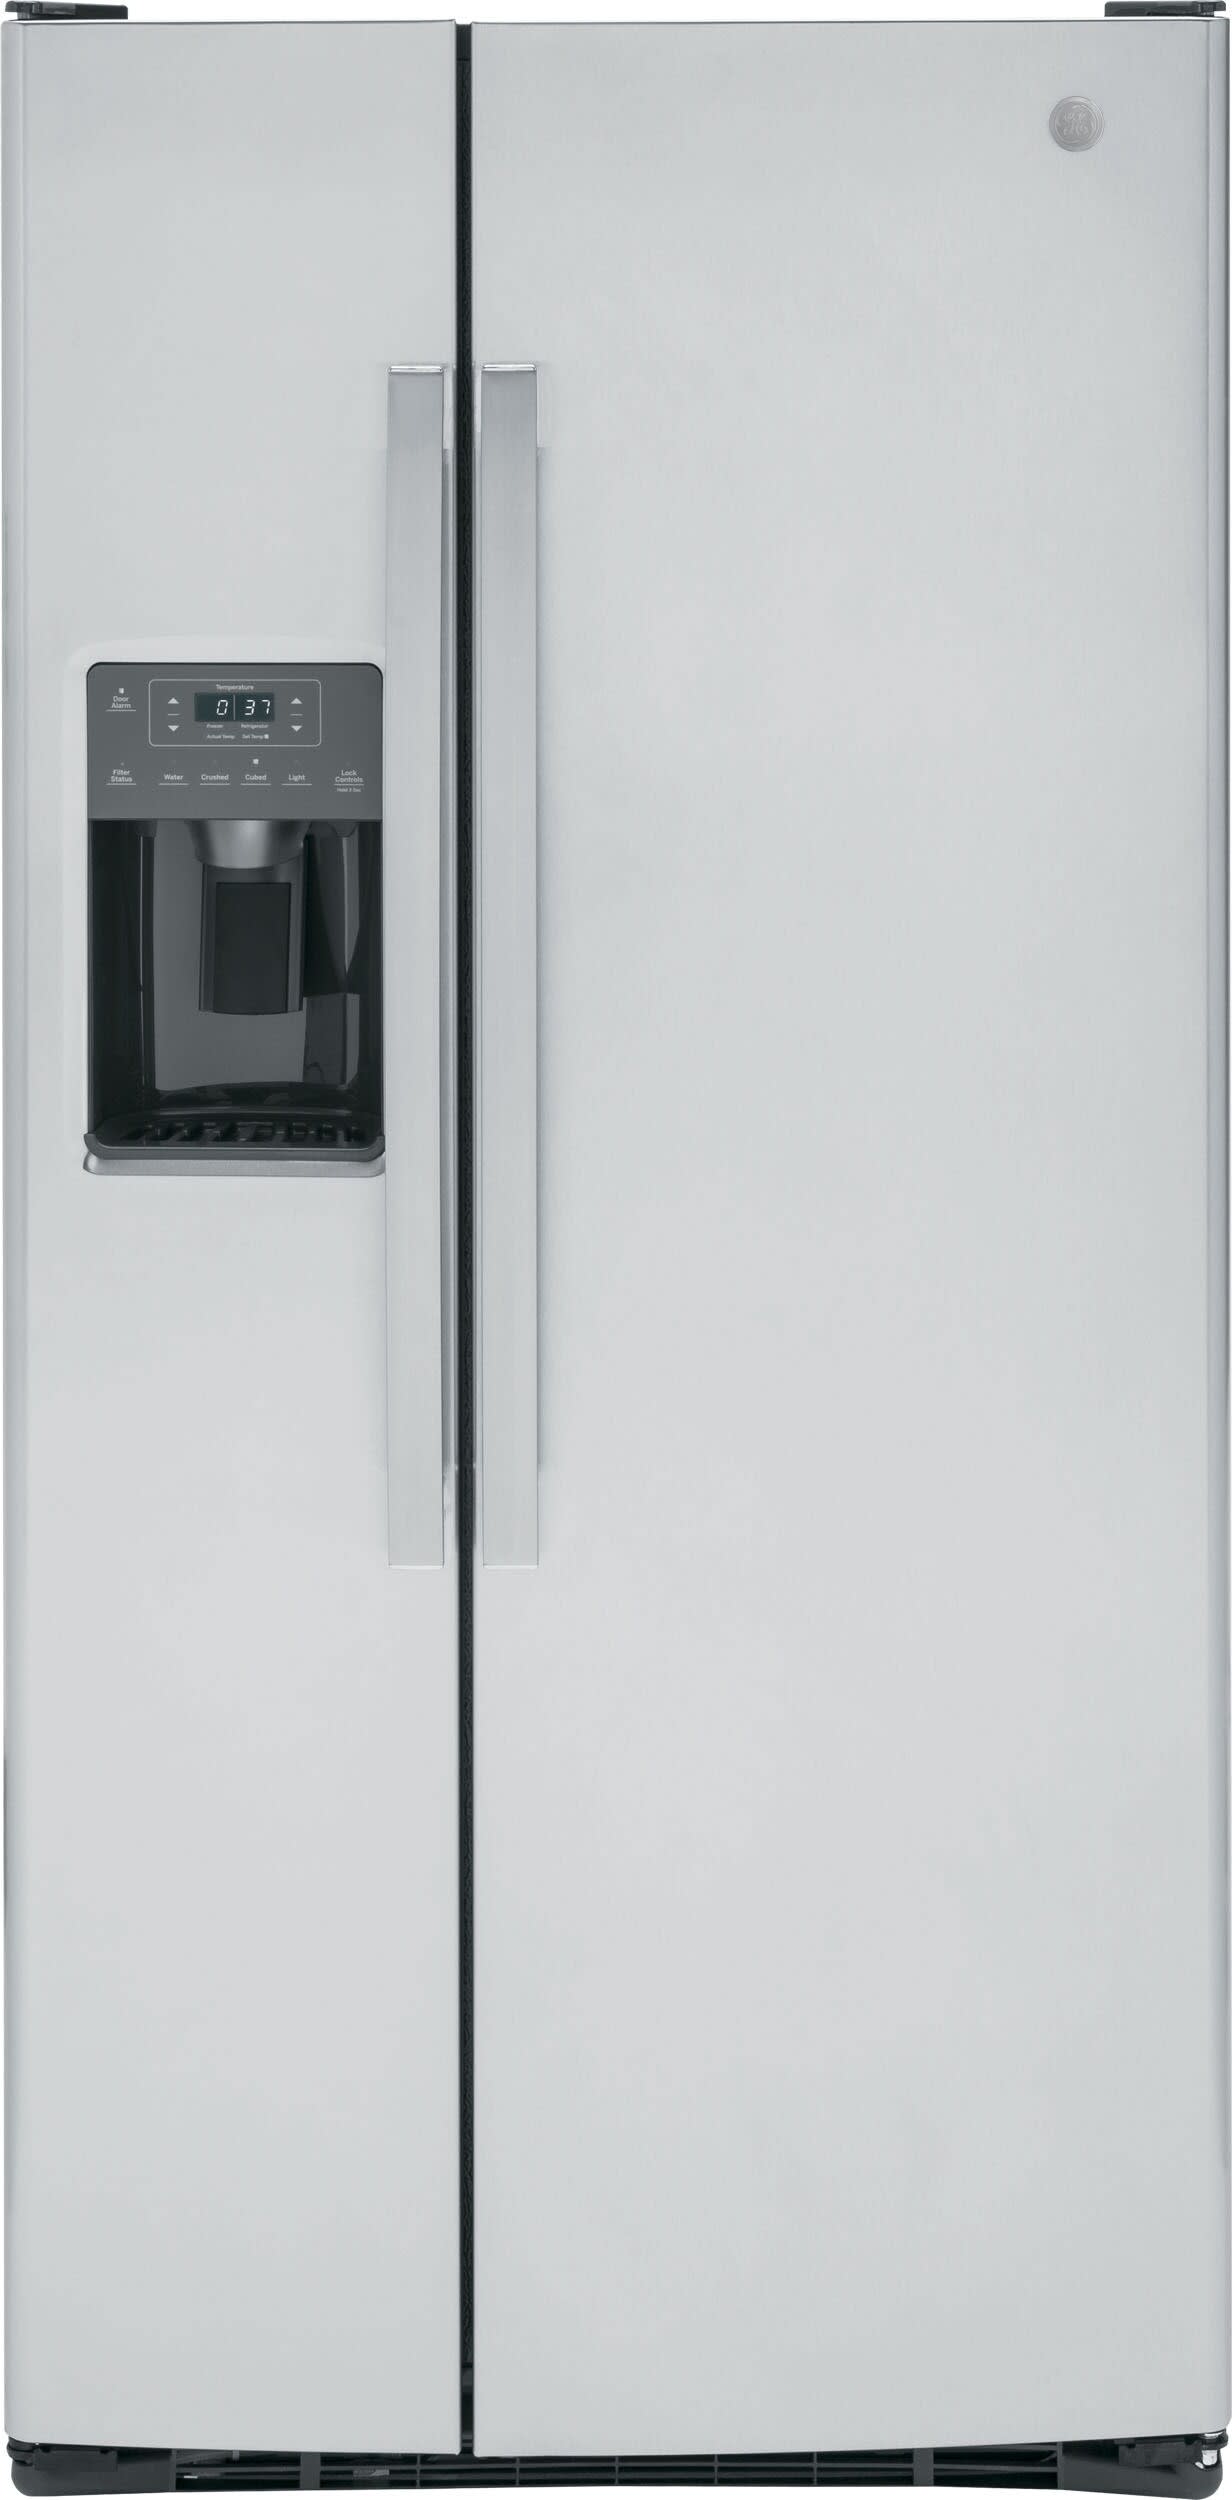 33 Inch Side by Side Refrigerator